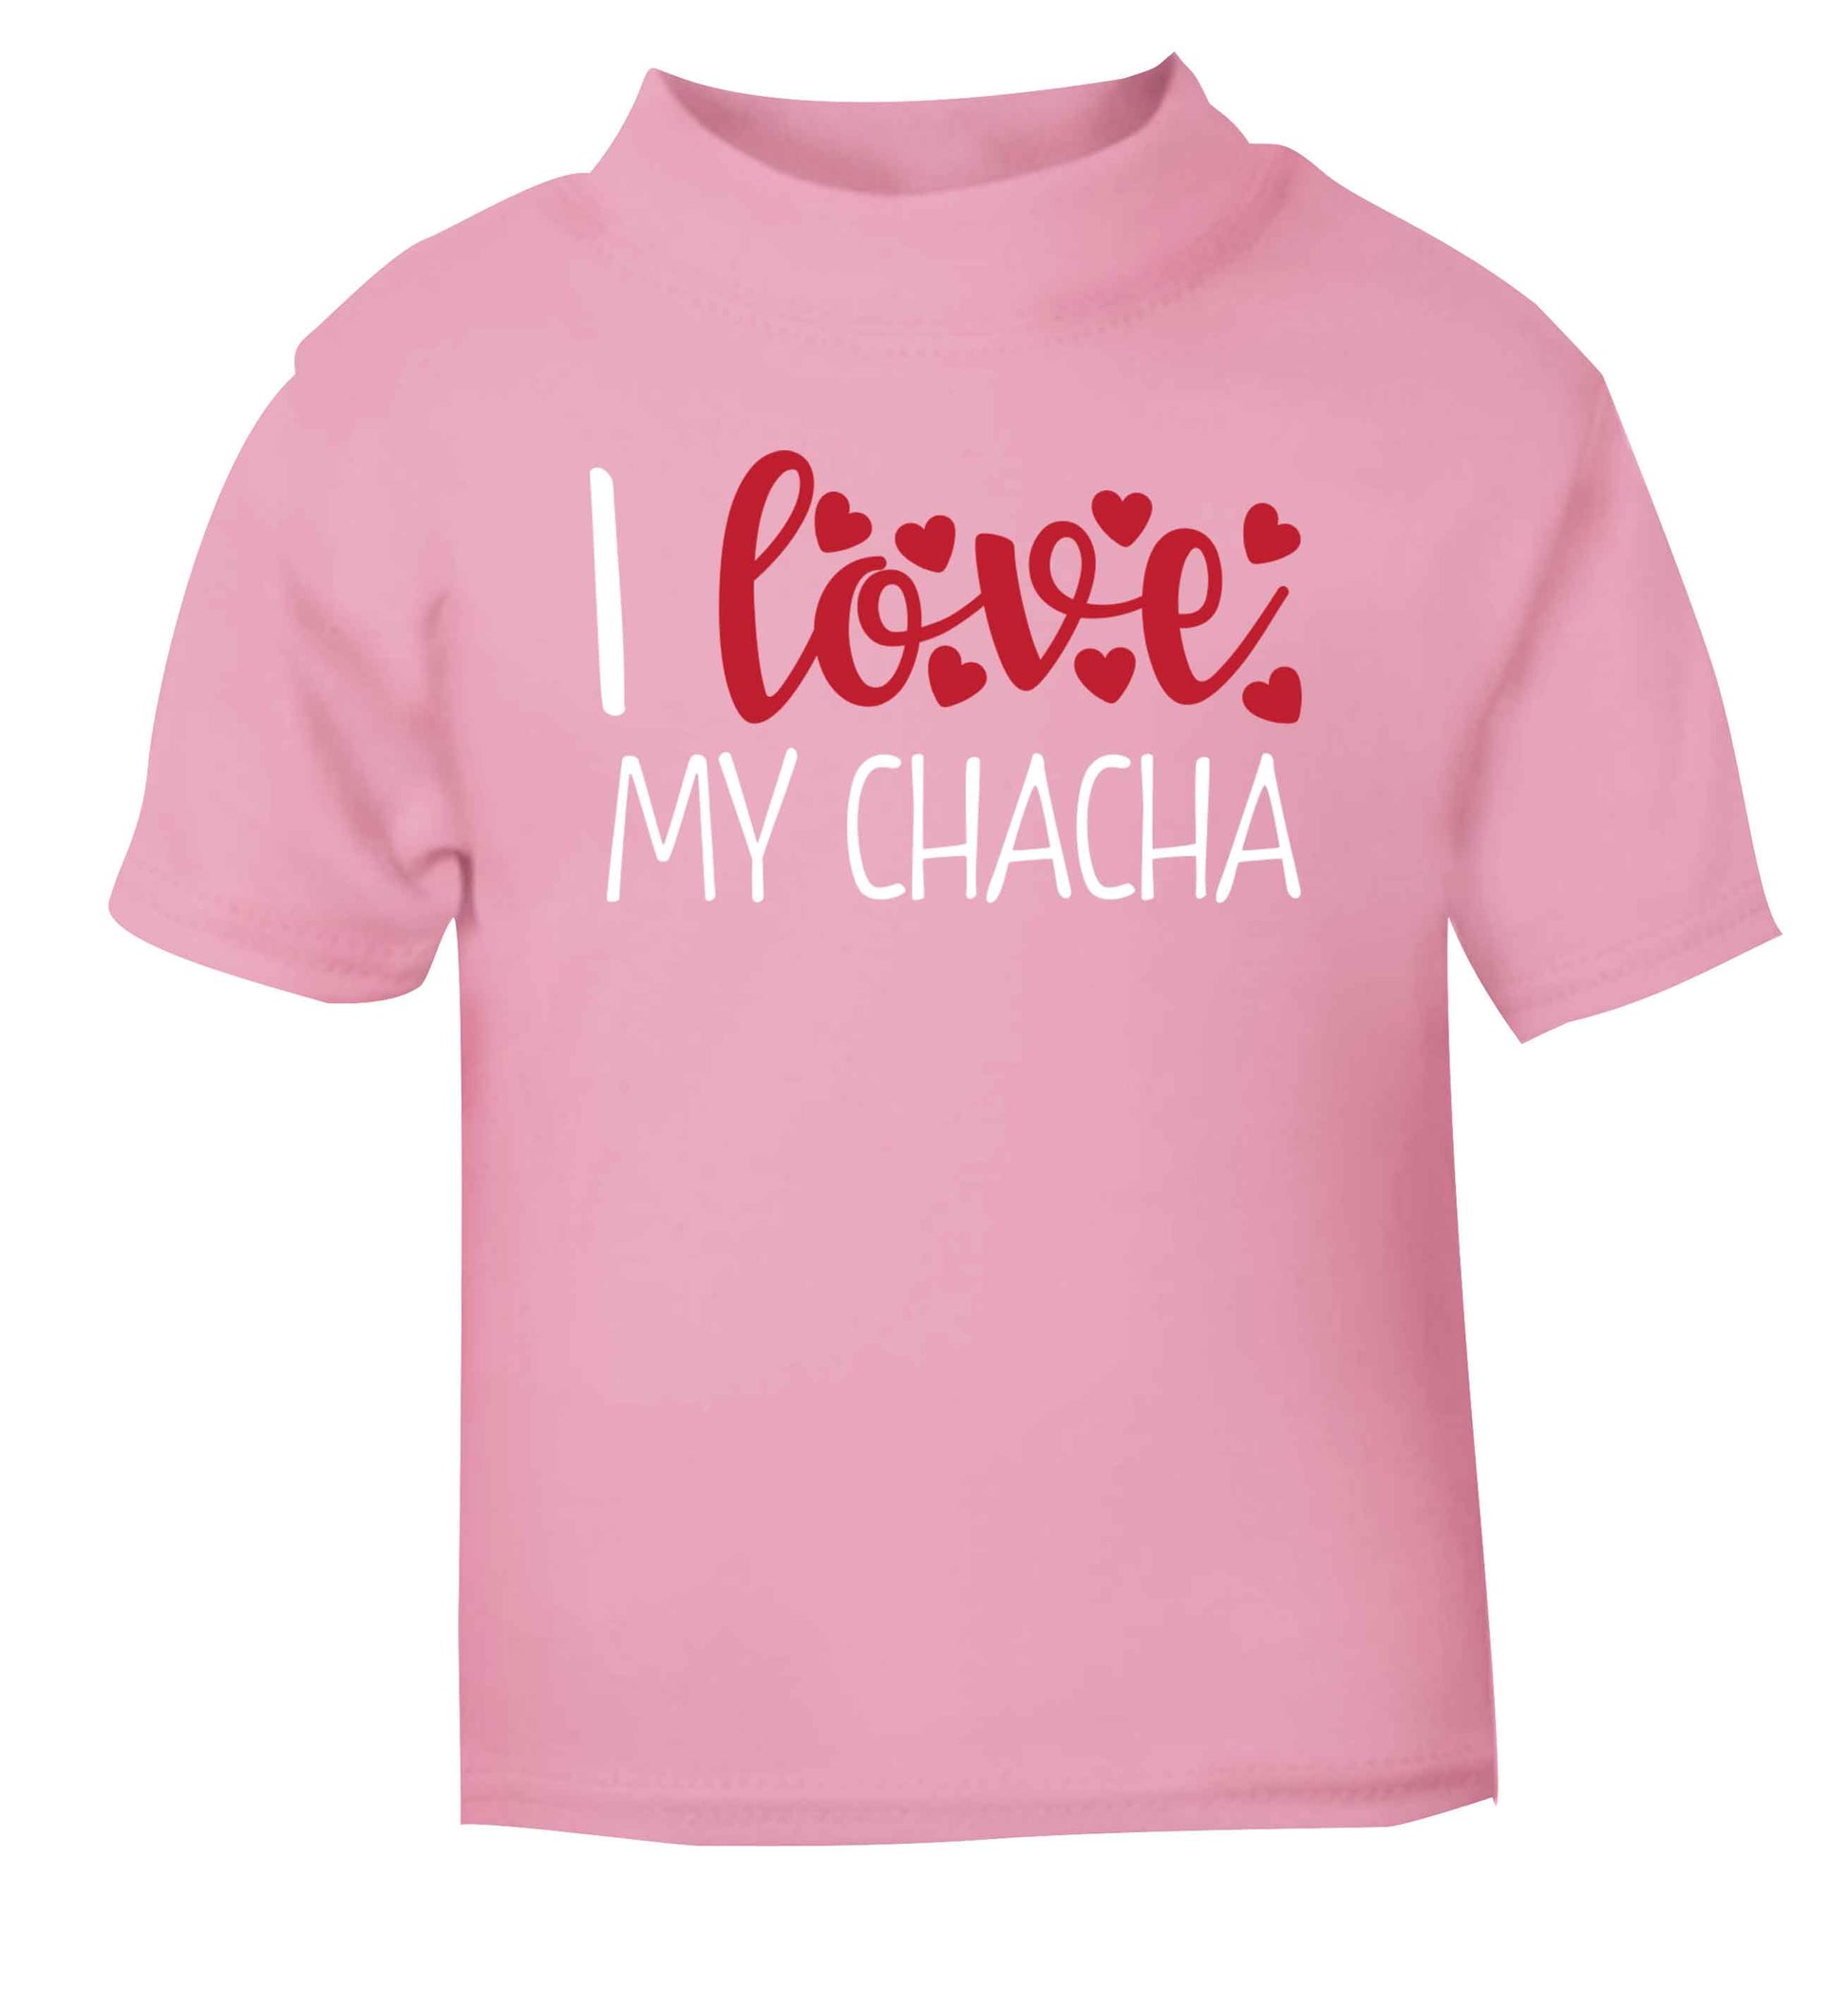 I love my chacha light pink Baby Toddler Tshirt 2 Years